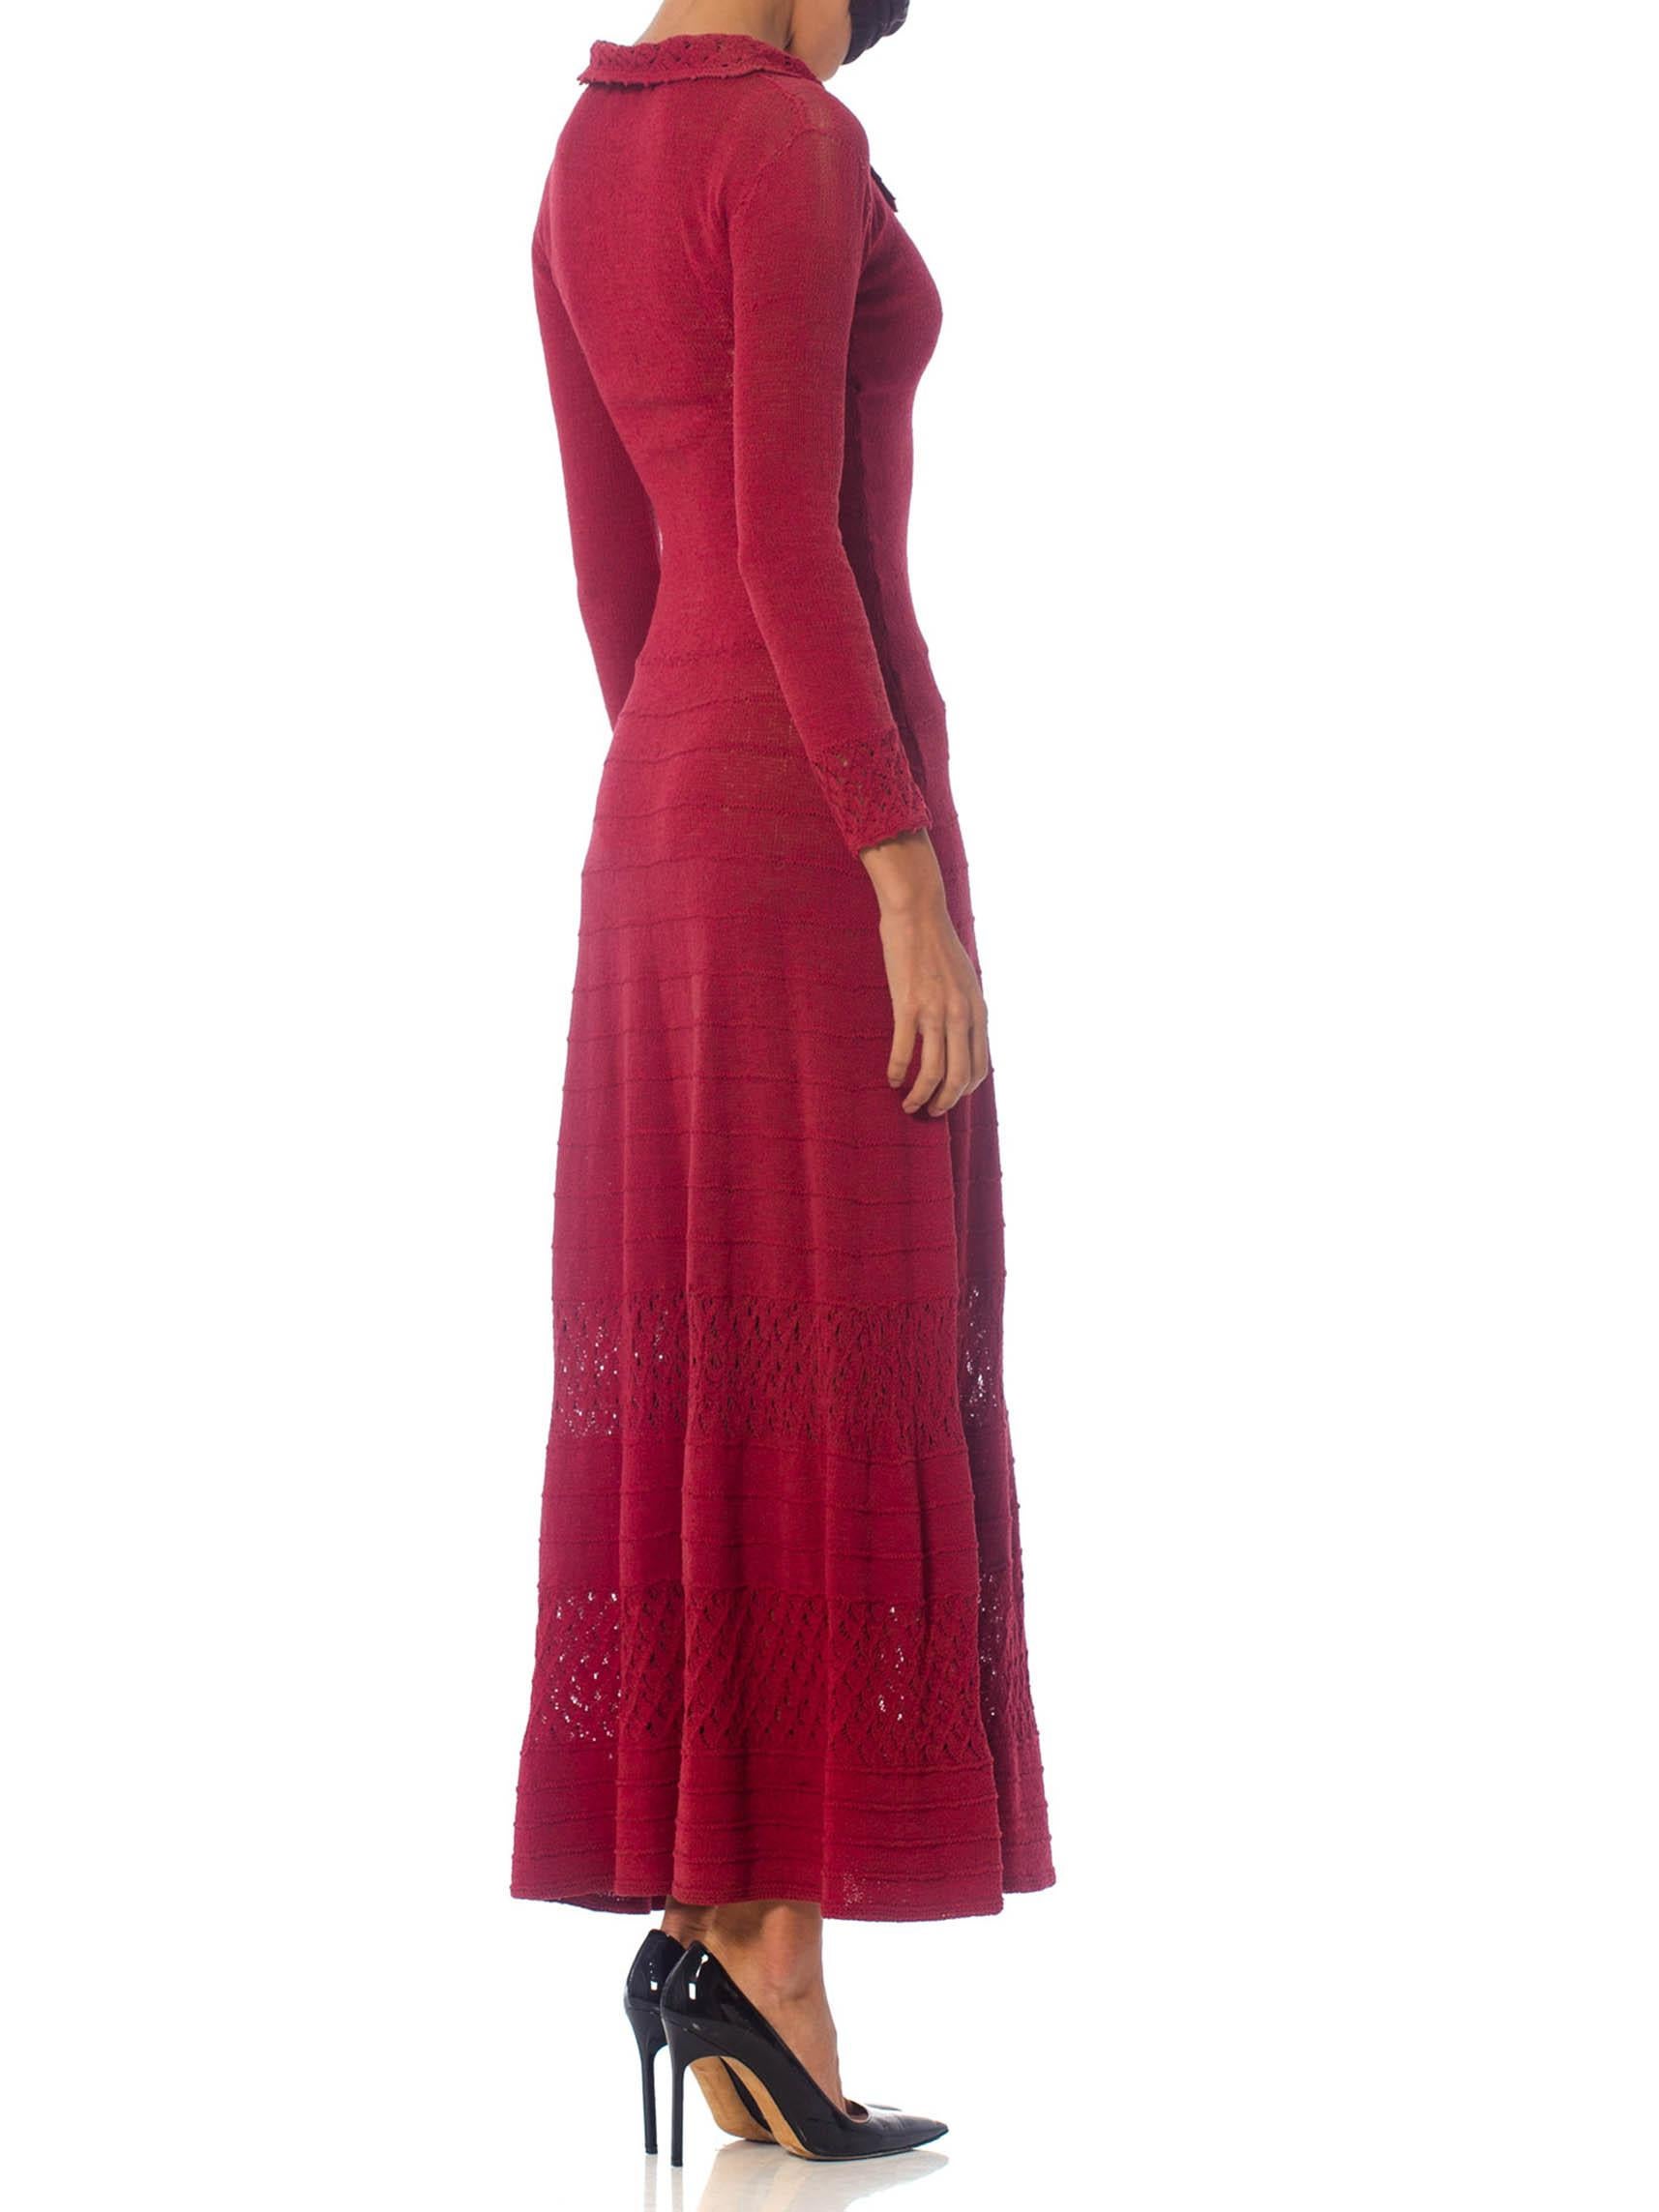 cranberry red dress